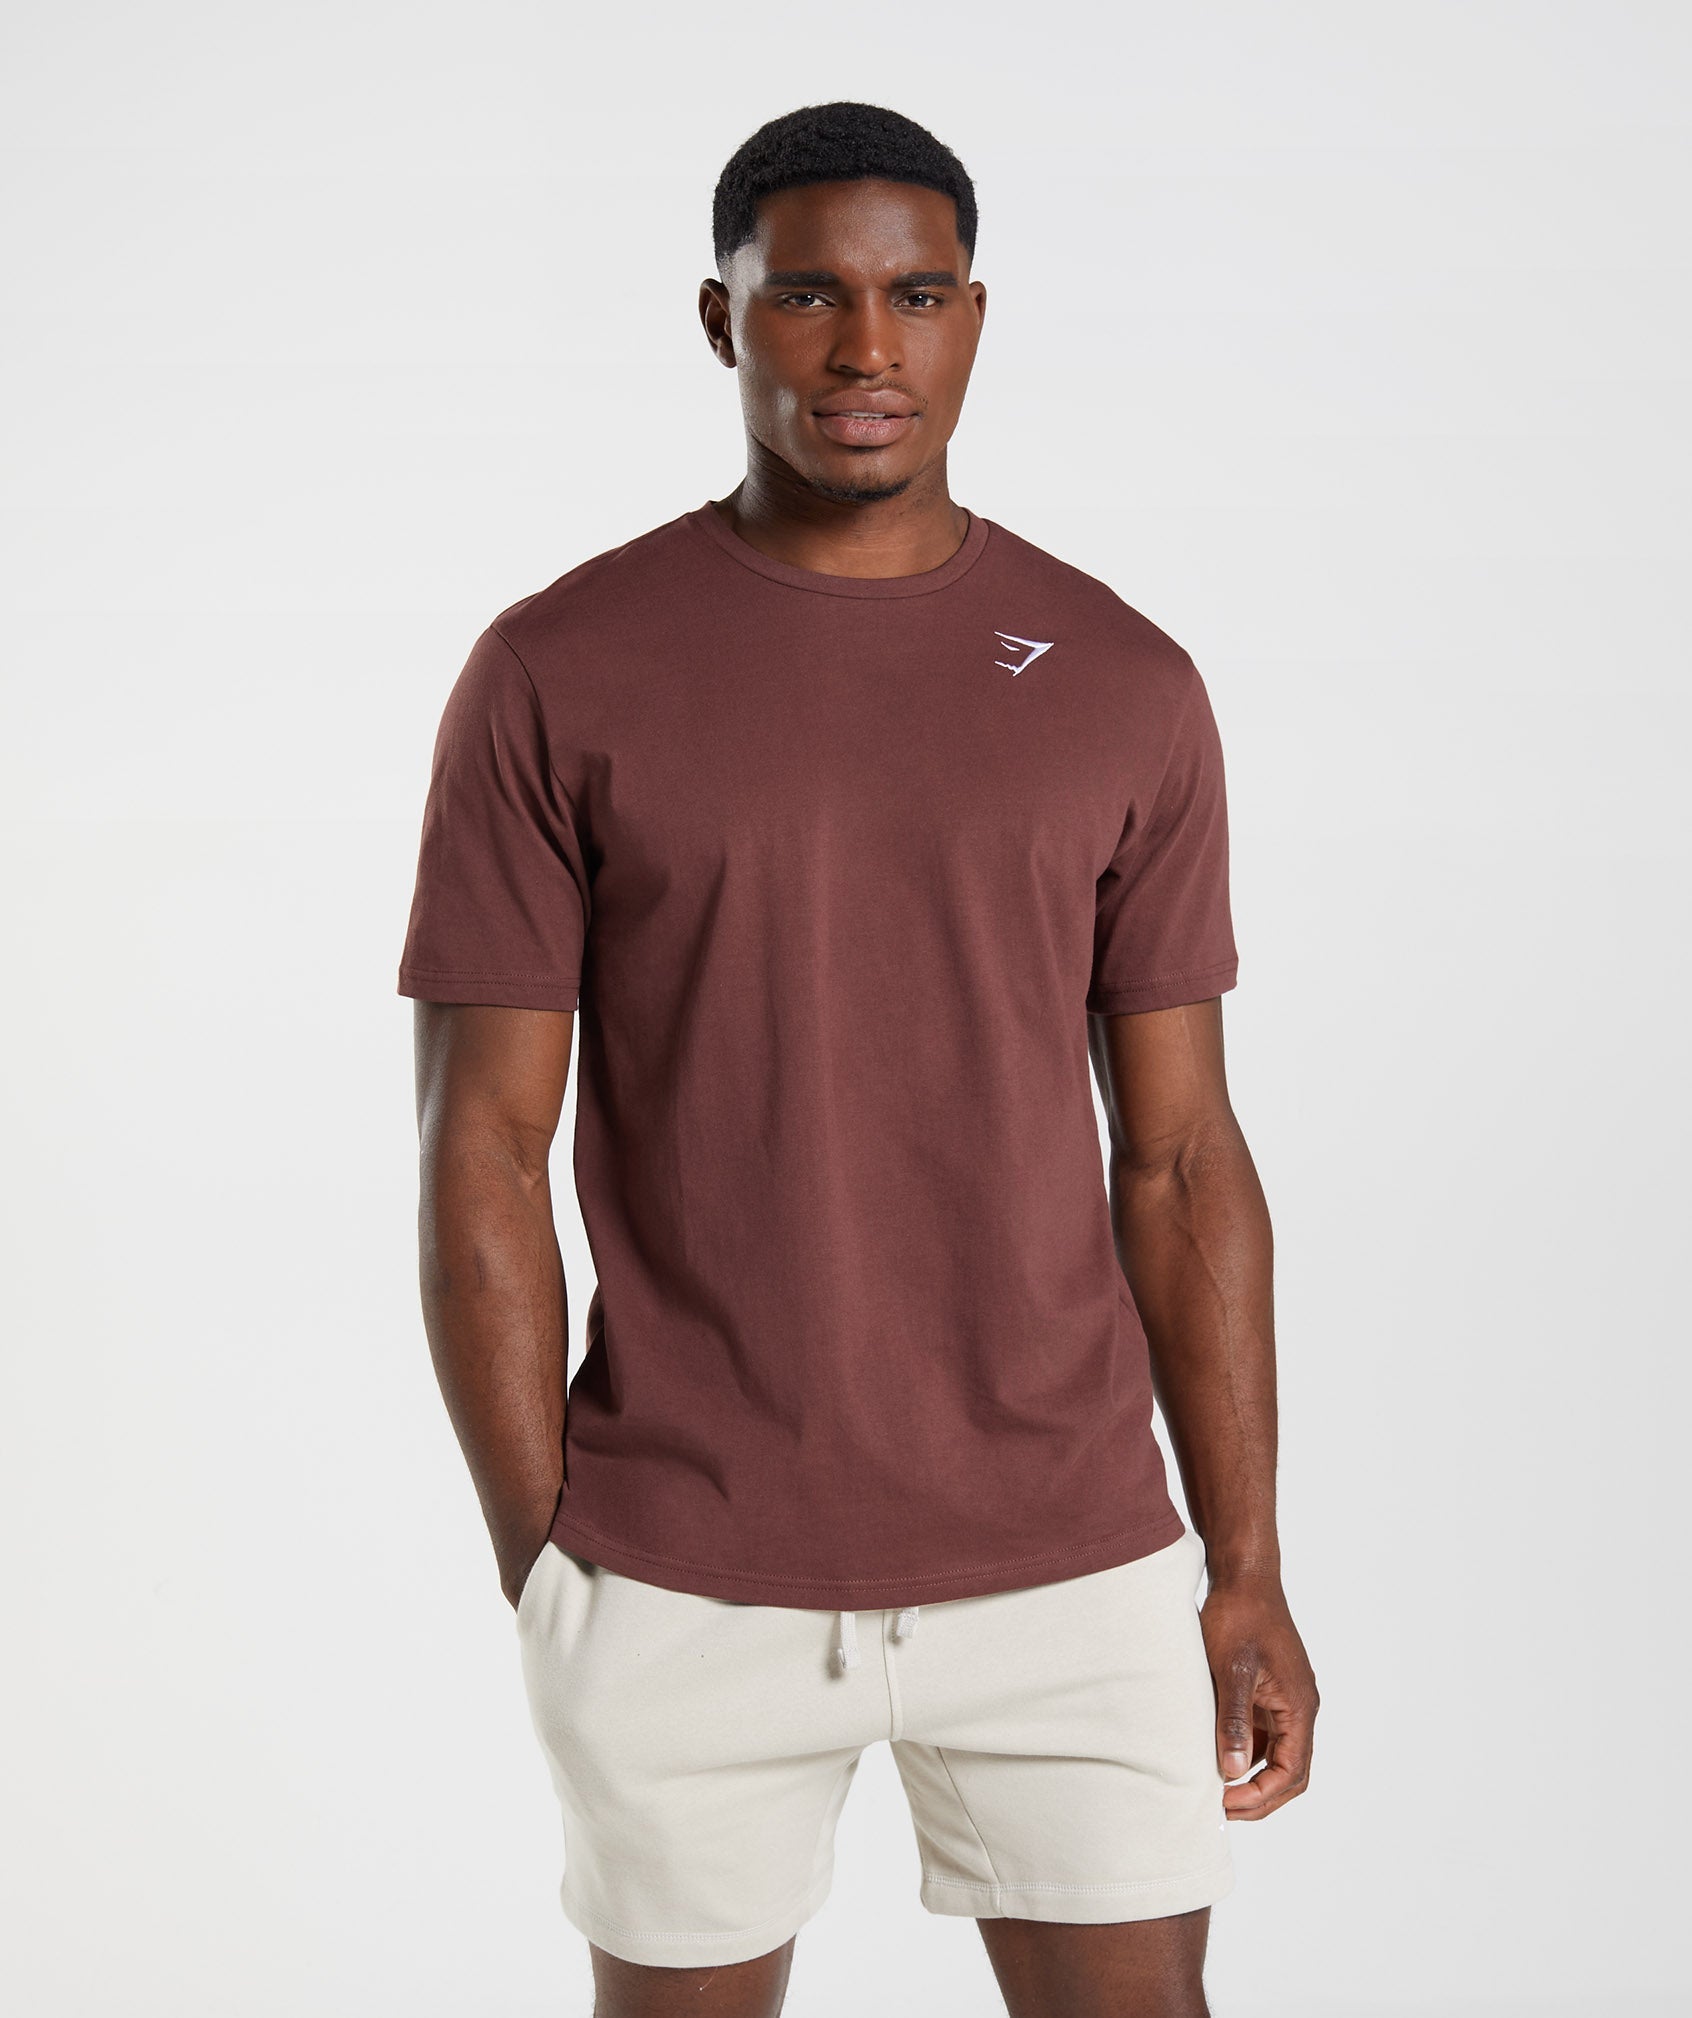 Gymshark Conditioning Graphic T-Shirt - Burgundy Brown